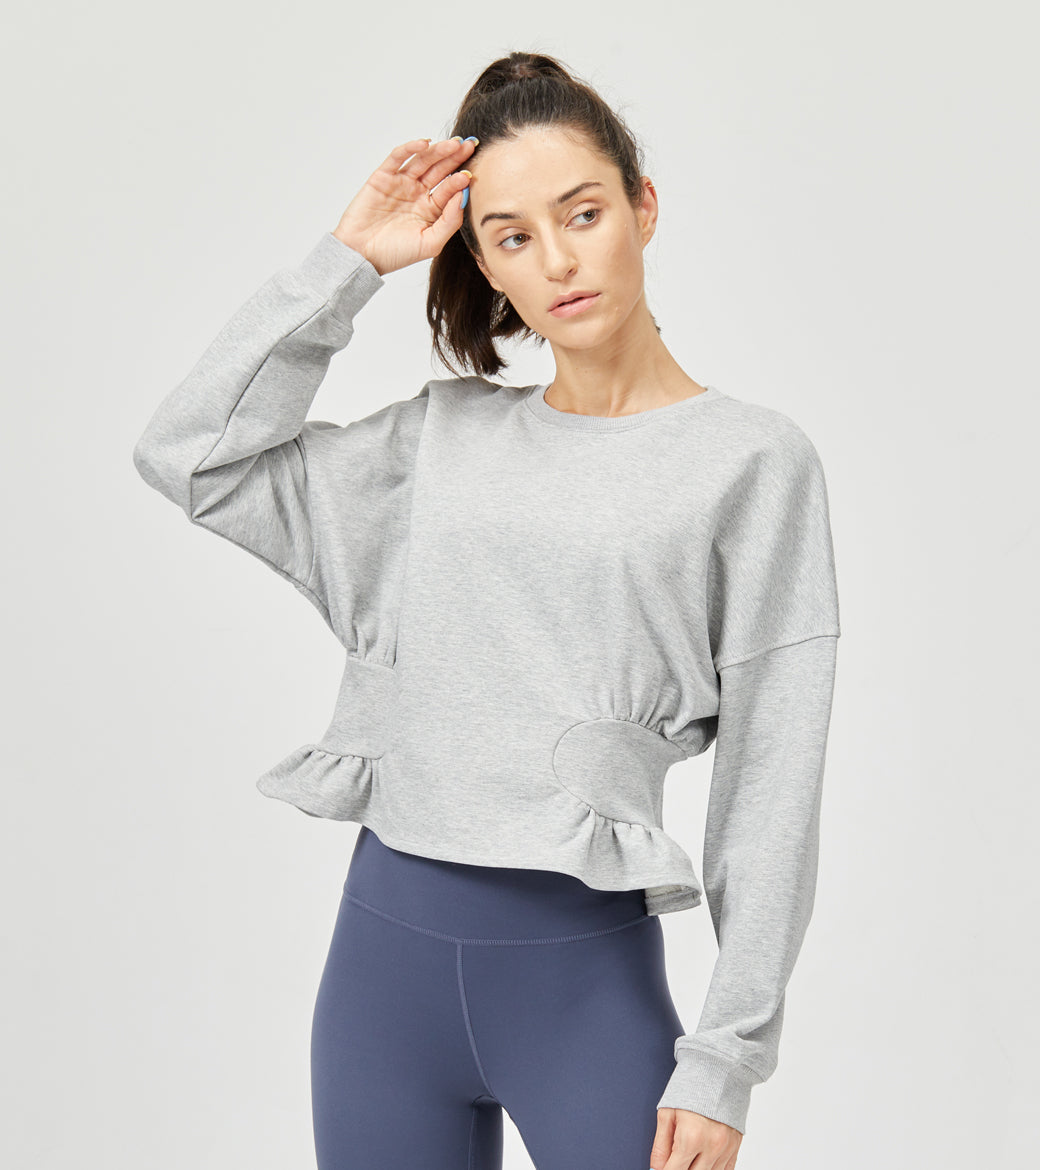 LOVESOFT Women Light Grey Crew Neck Fashion Self-cultivation Wild Frosted Knitted Sweatshirt